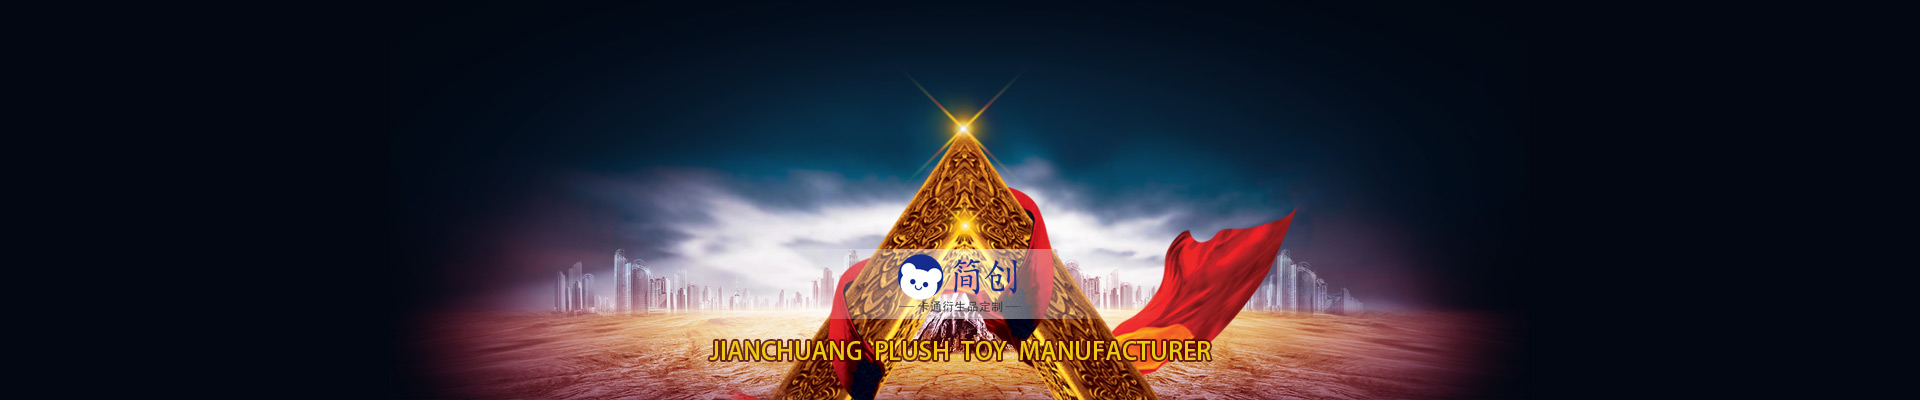 Company Profile - JianChuang Toy Factory